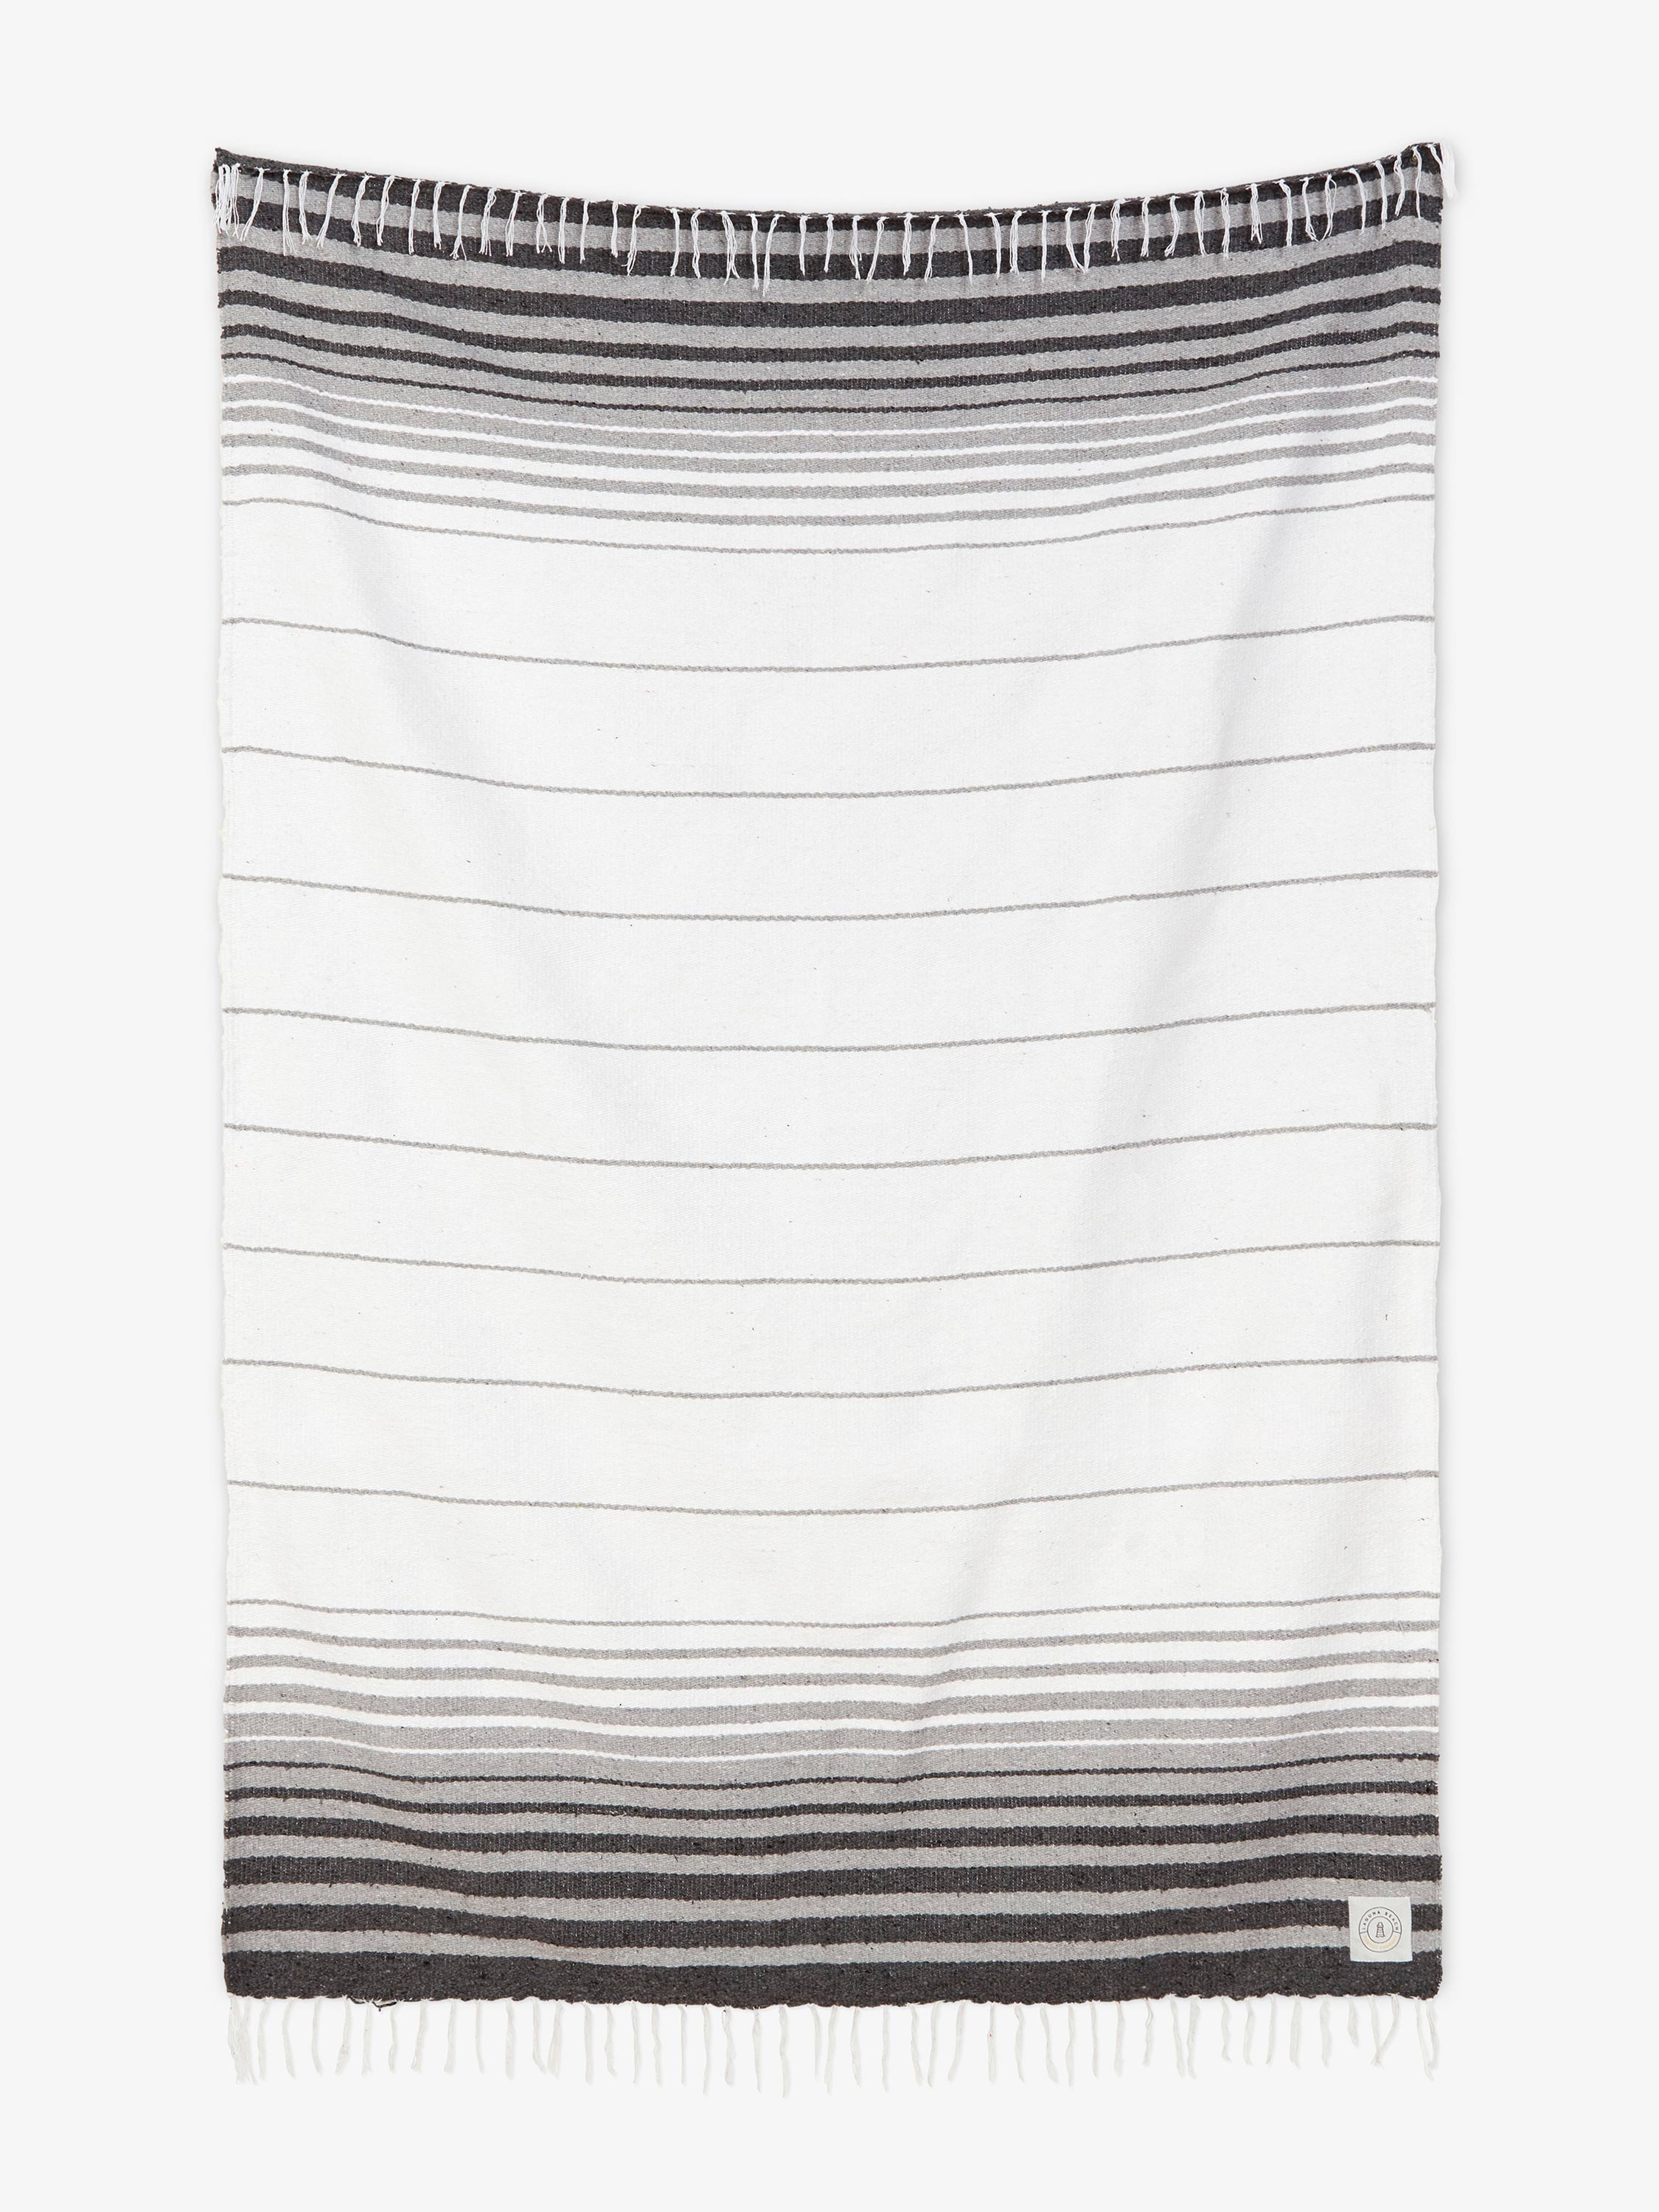 Gray Tulum Mexican Blanket by Laguna Beach Textile Company